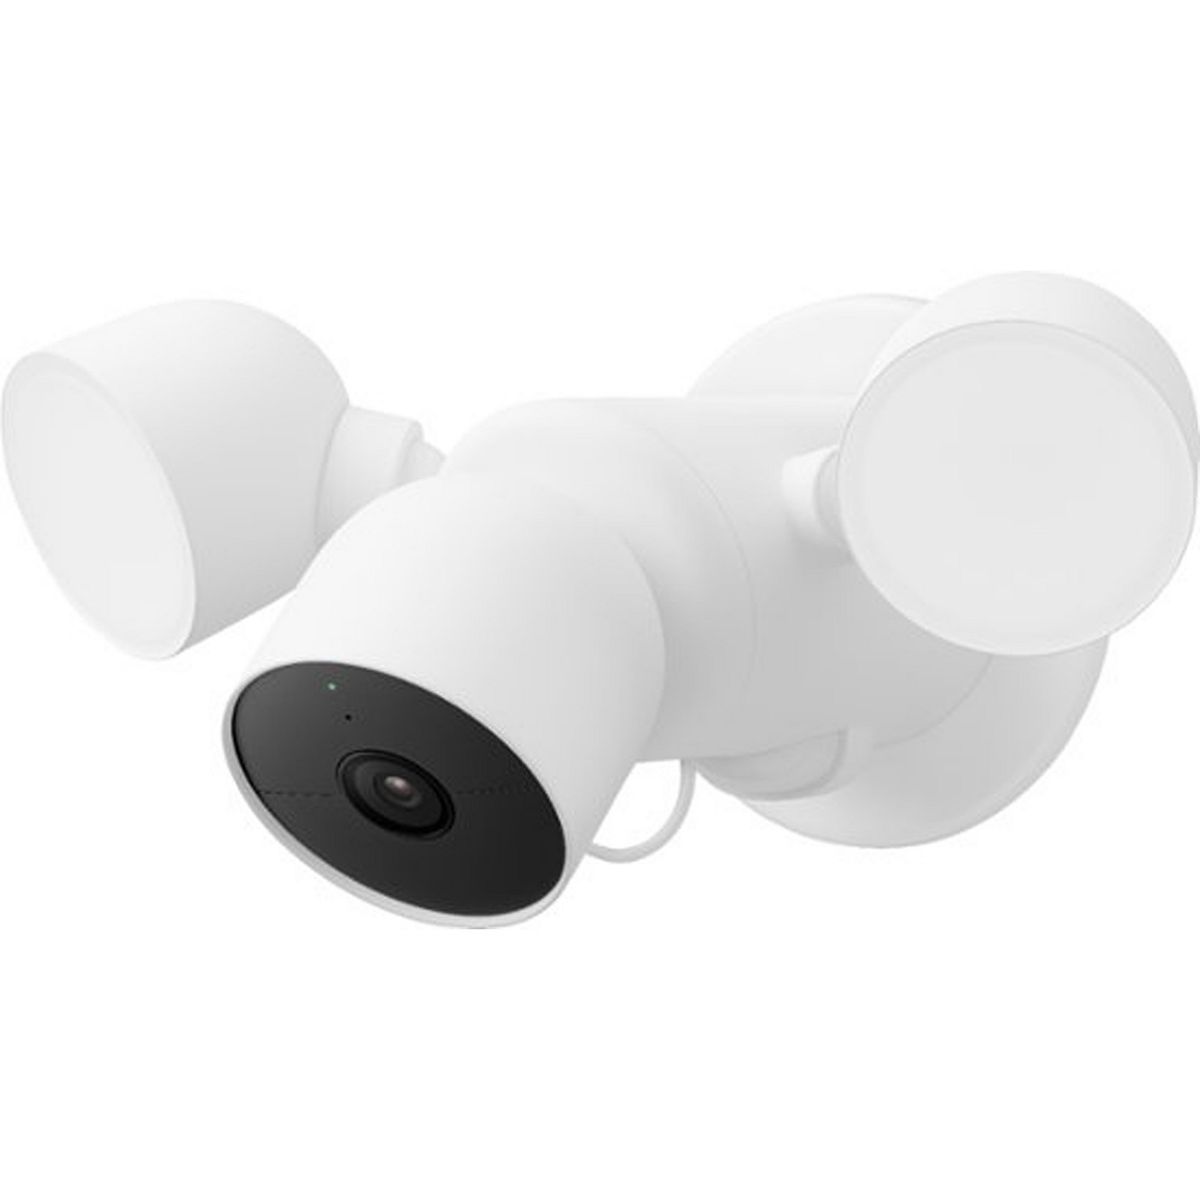 Google Nest Cam Security Camera with Floodlight | Kohl's